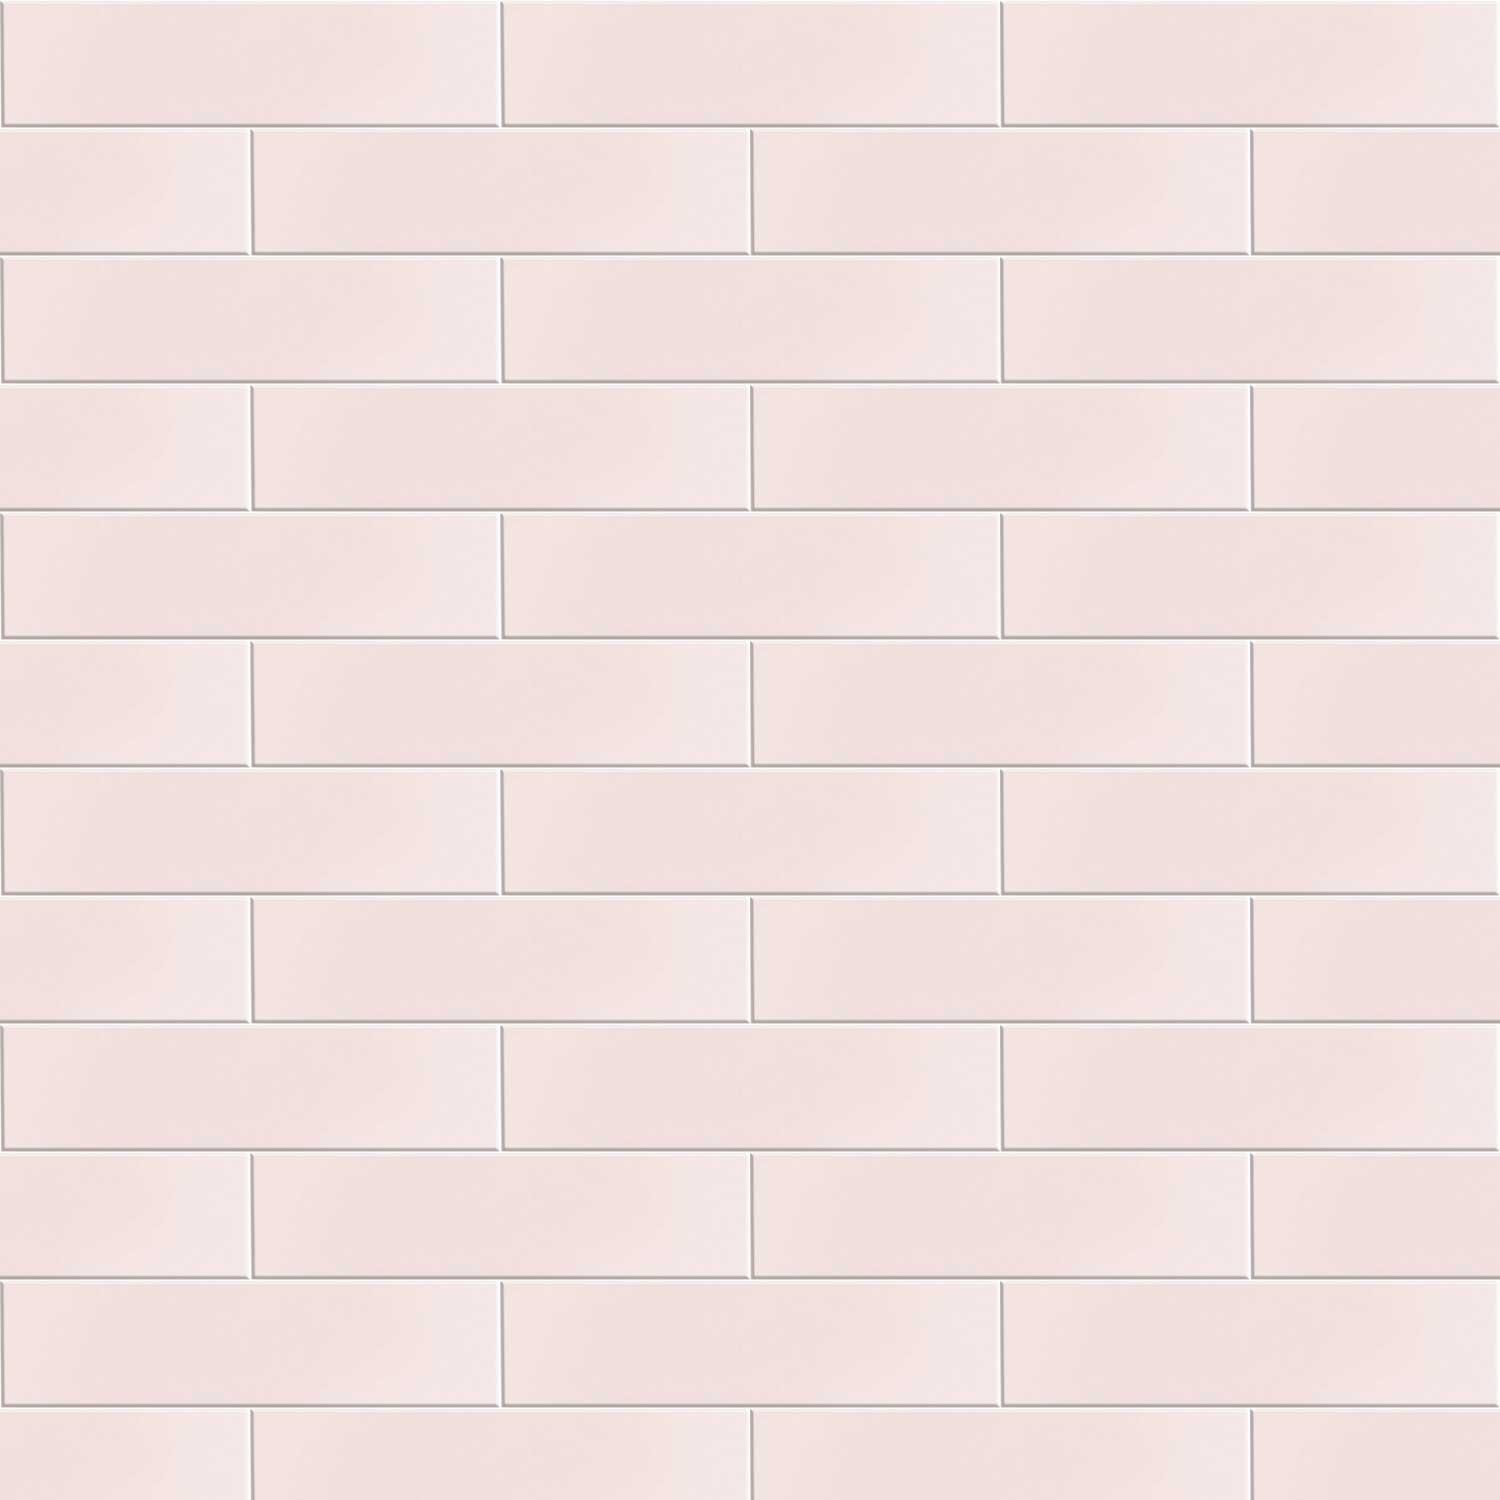 Etna Pink Porcelain Tile Indoor Wall Floor Subway Brick Small 92 x 368mm